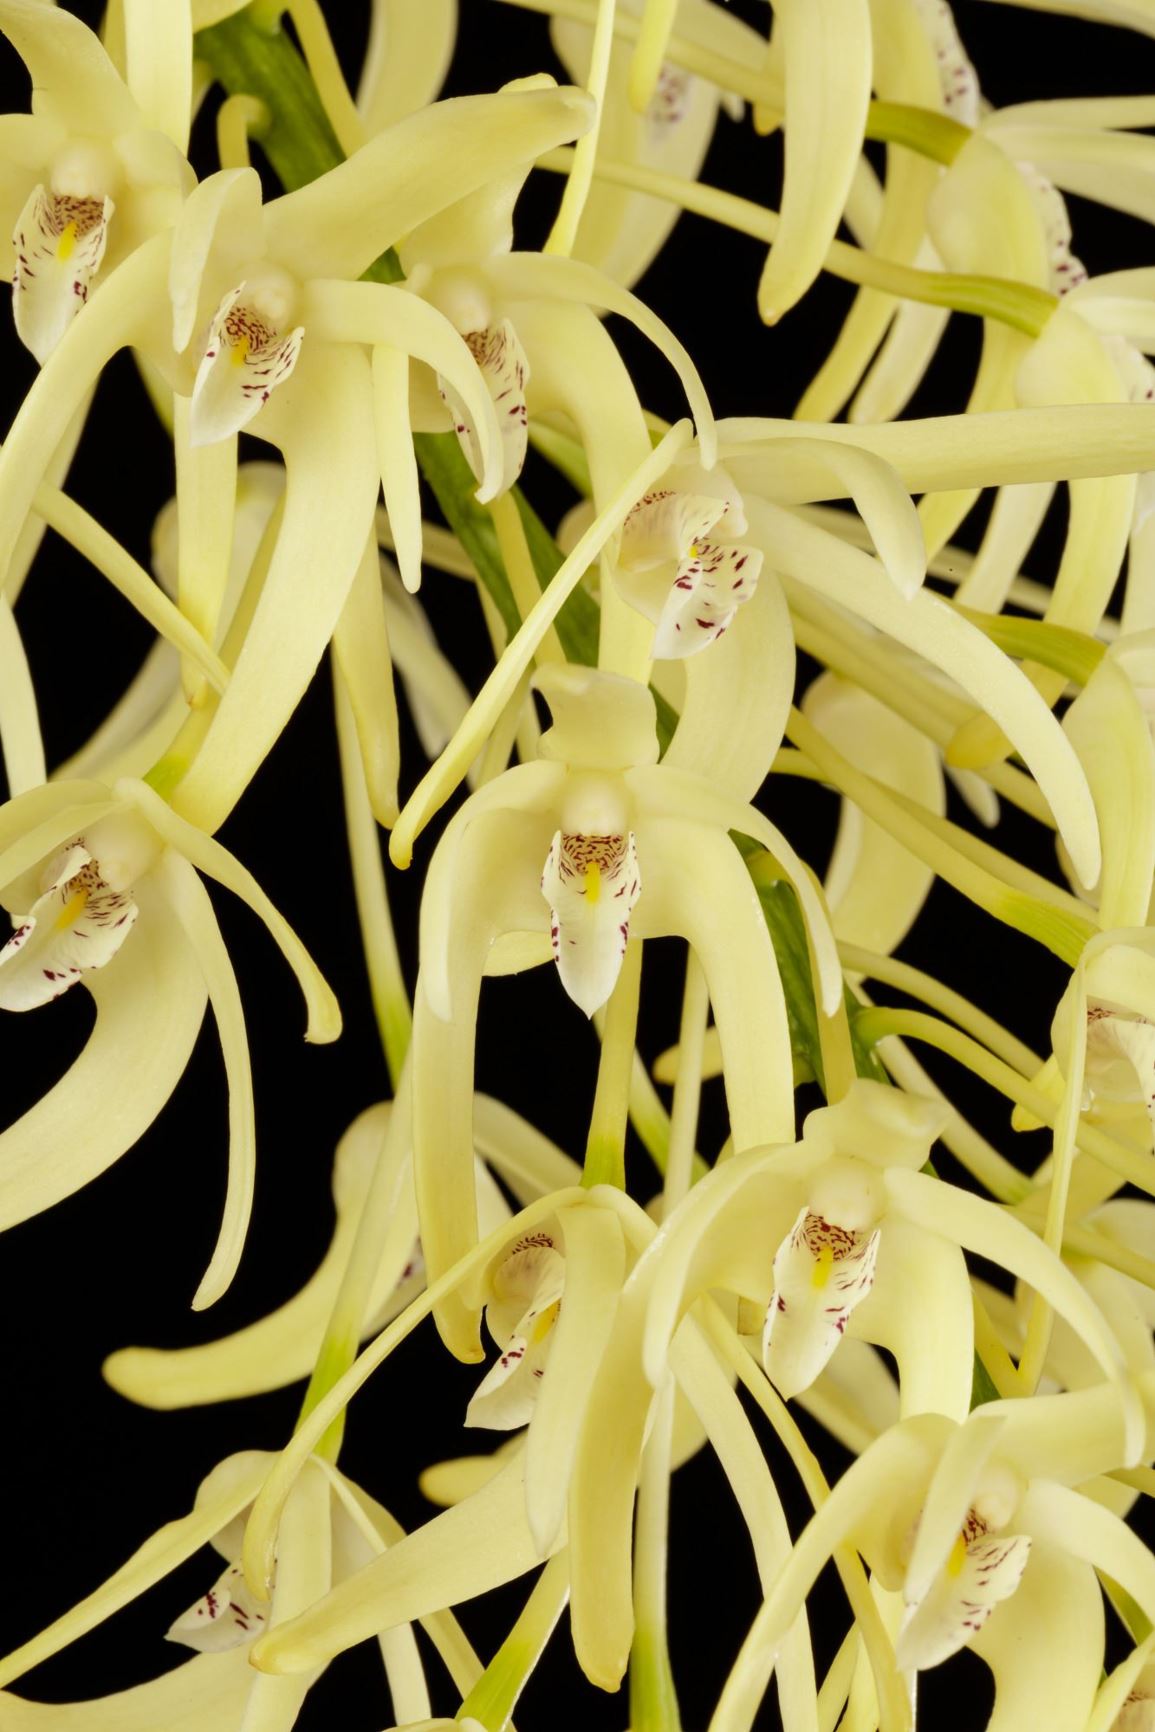 Dendrobium speciosum var. grandiflorum - Golden King Orchid, Rock Orchid variety, The Outstanding Dendrobium variety